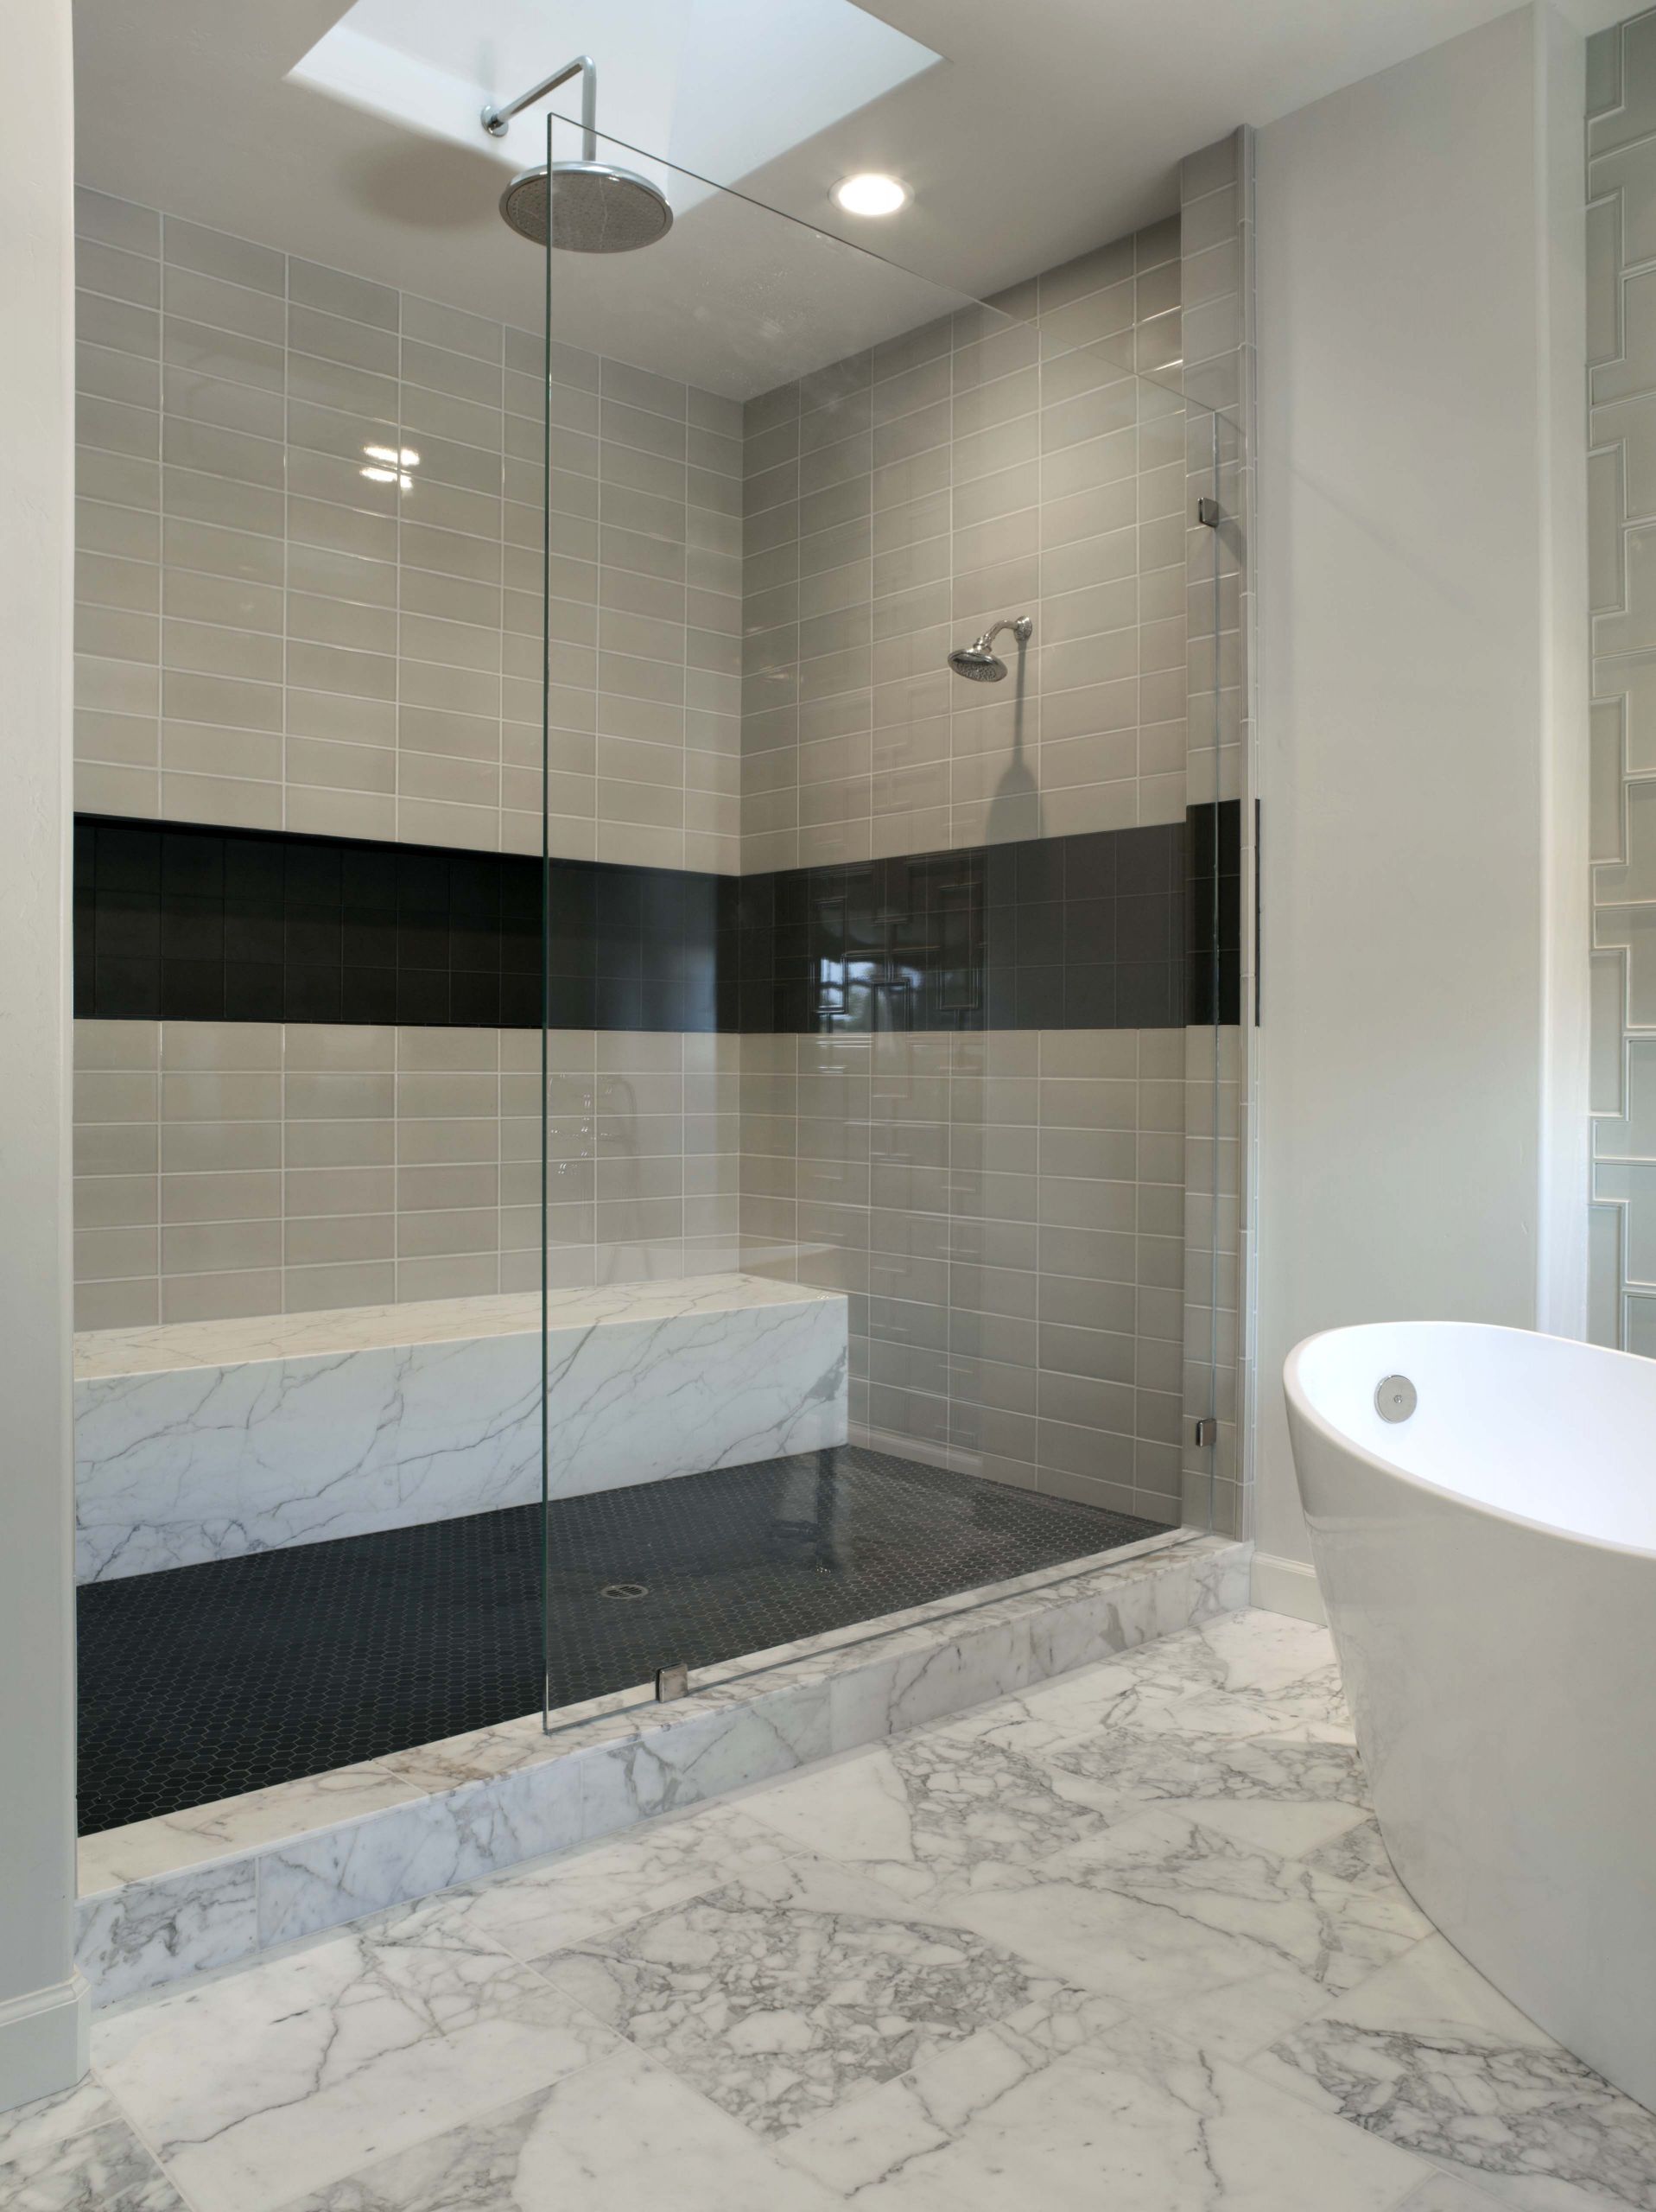 Bathroom Tiles Design Images
 30 great ideas for marble bathroom floor tiles